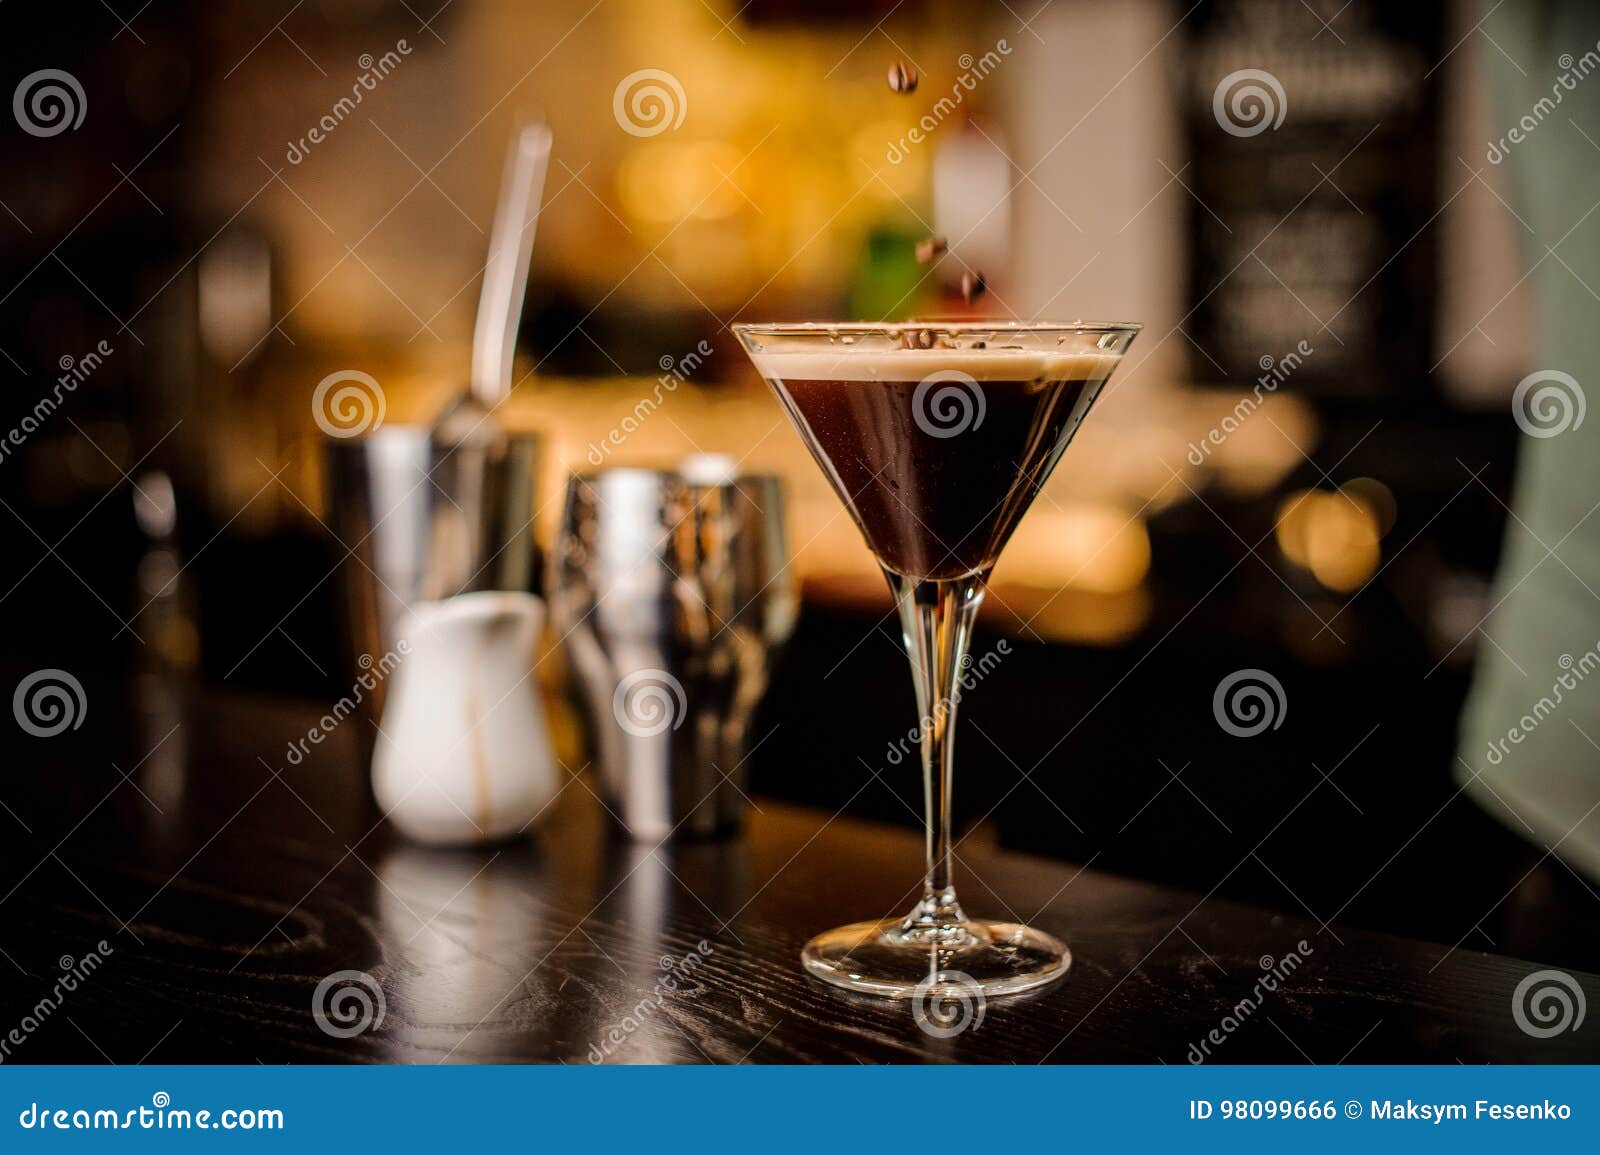 bartender decorated espresso cocktail drink white foam coffee bean